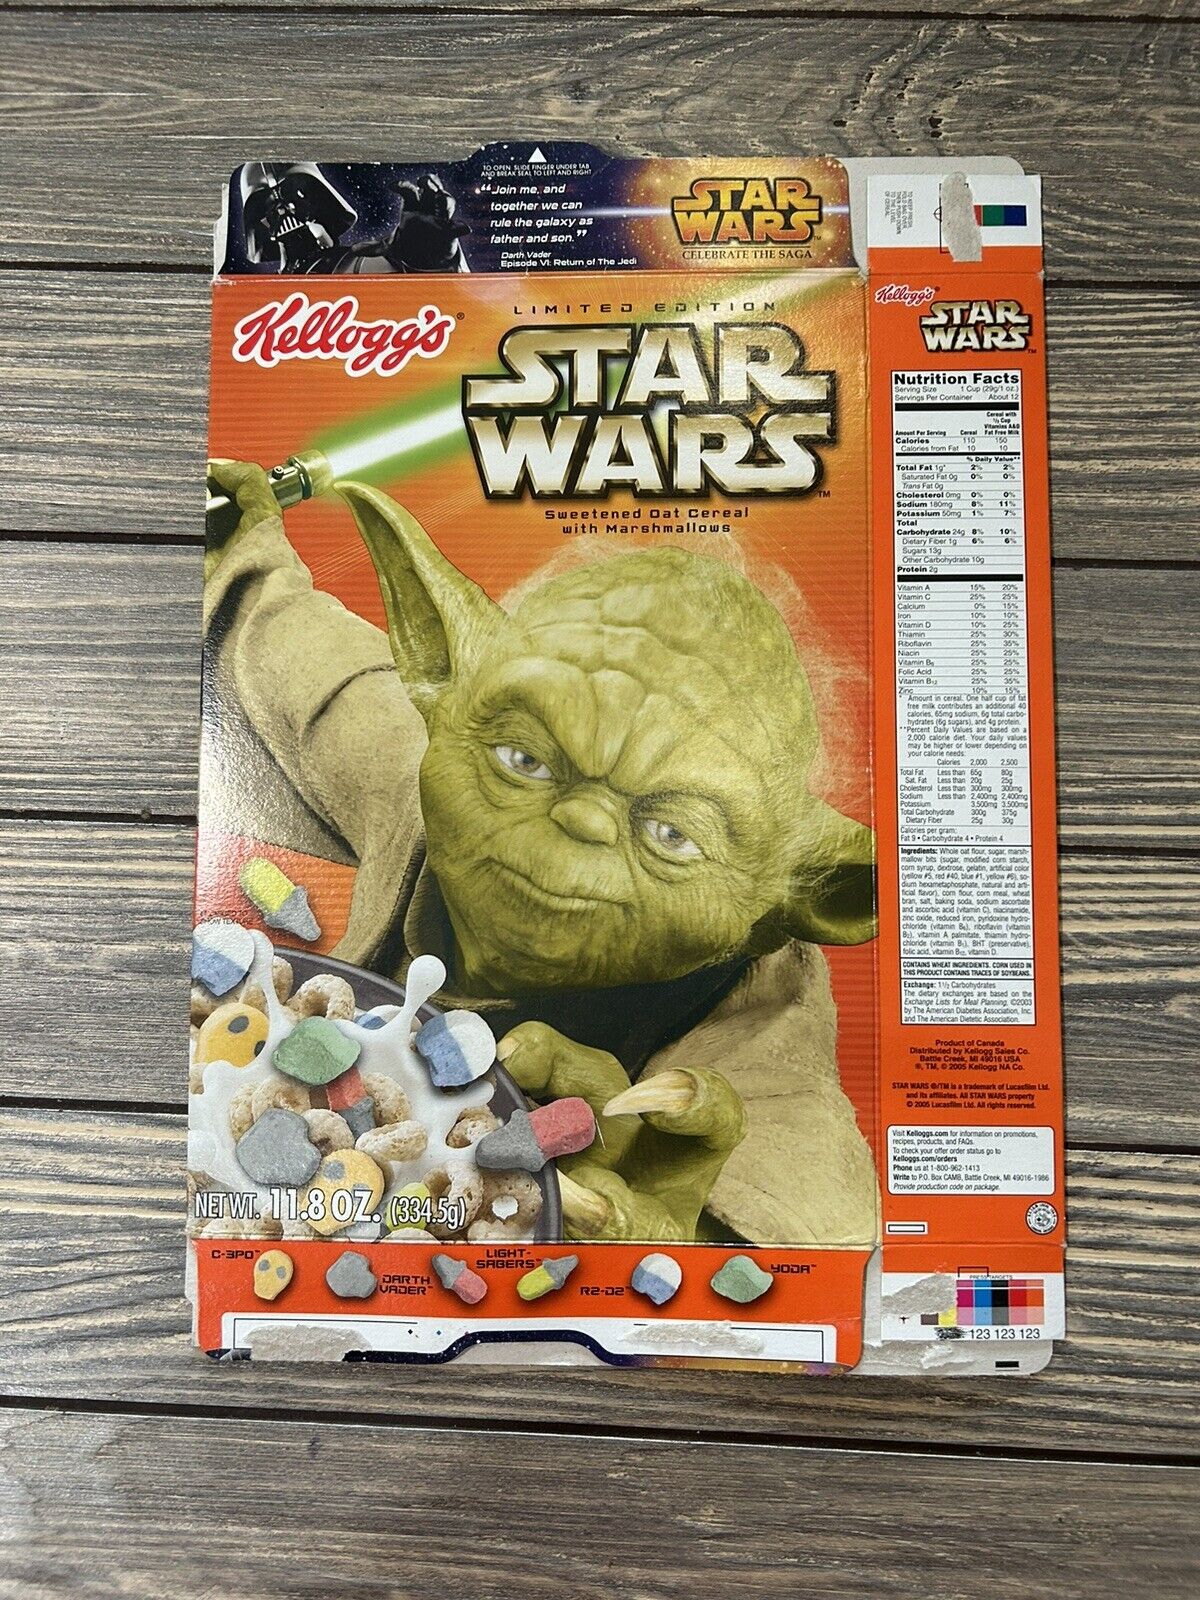 Kellogg's STAR WARS CEREAL BOX Yoda Episode III Orange Box Feb 2008 11.8 Oz